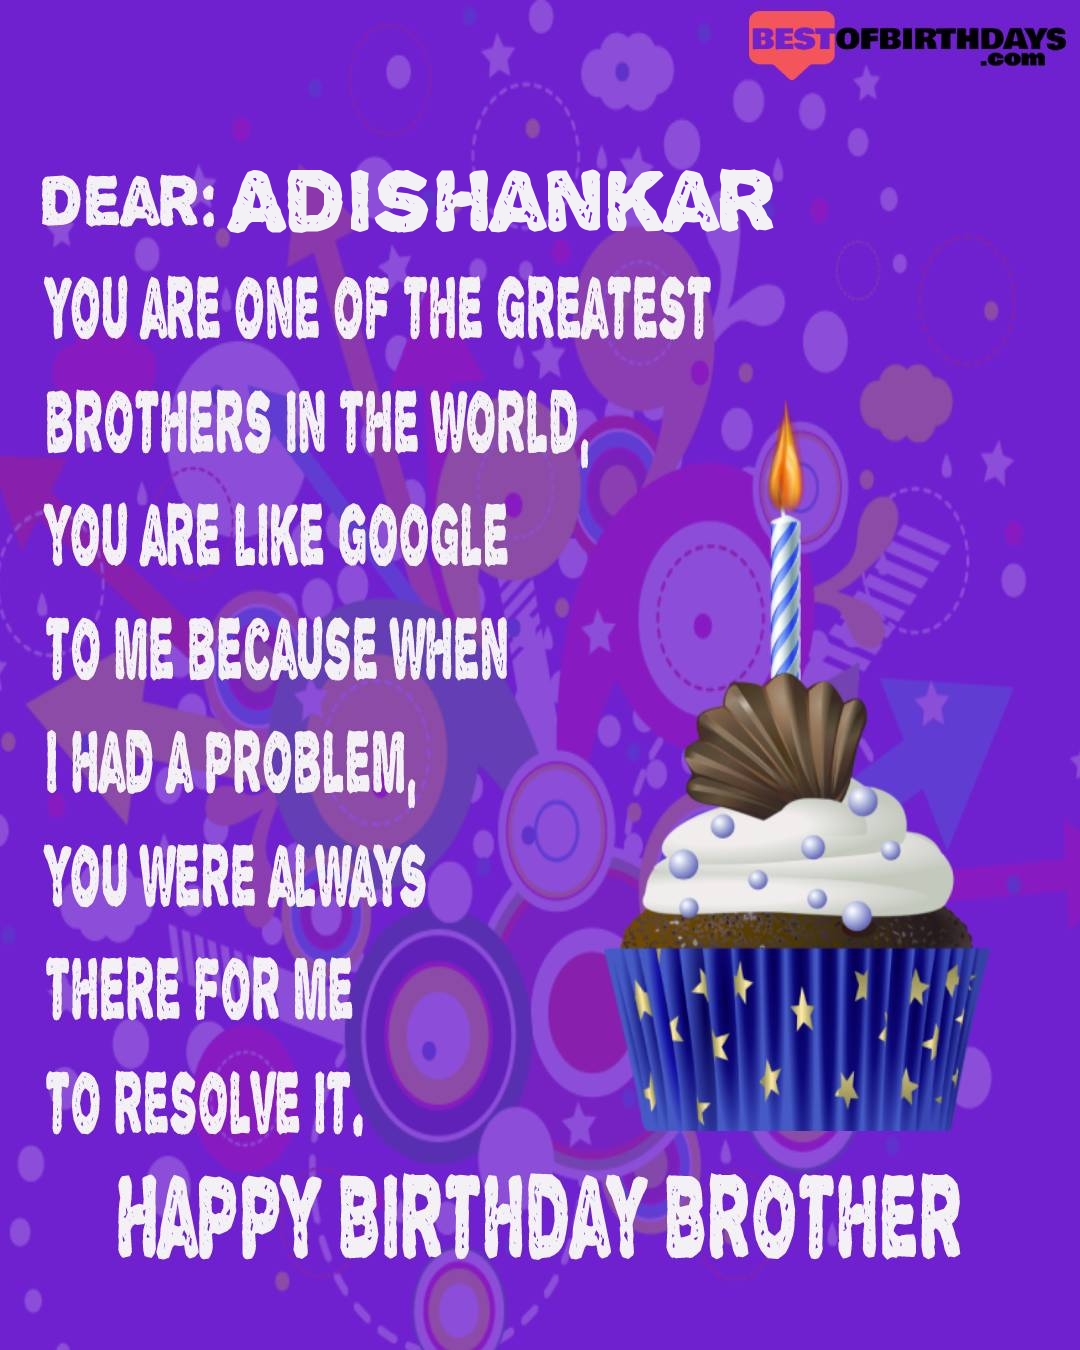 Happy birthday adishankar bhai brother bro